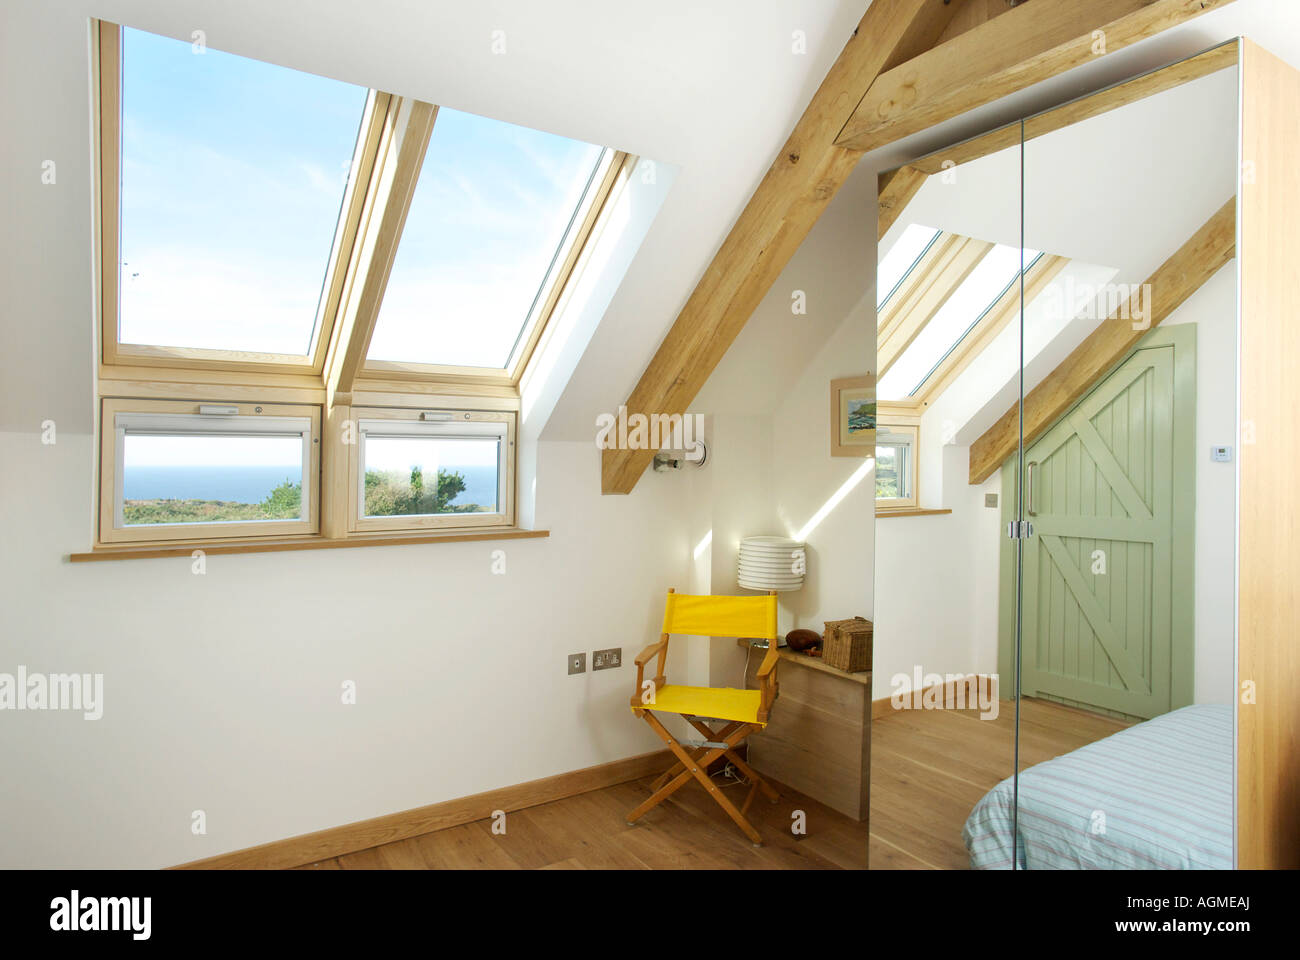 Bedroom in loft conversion with skylight windows Stock Photo